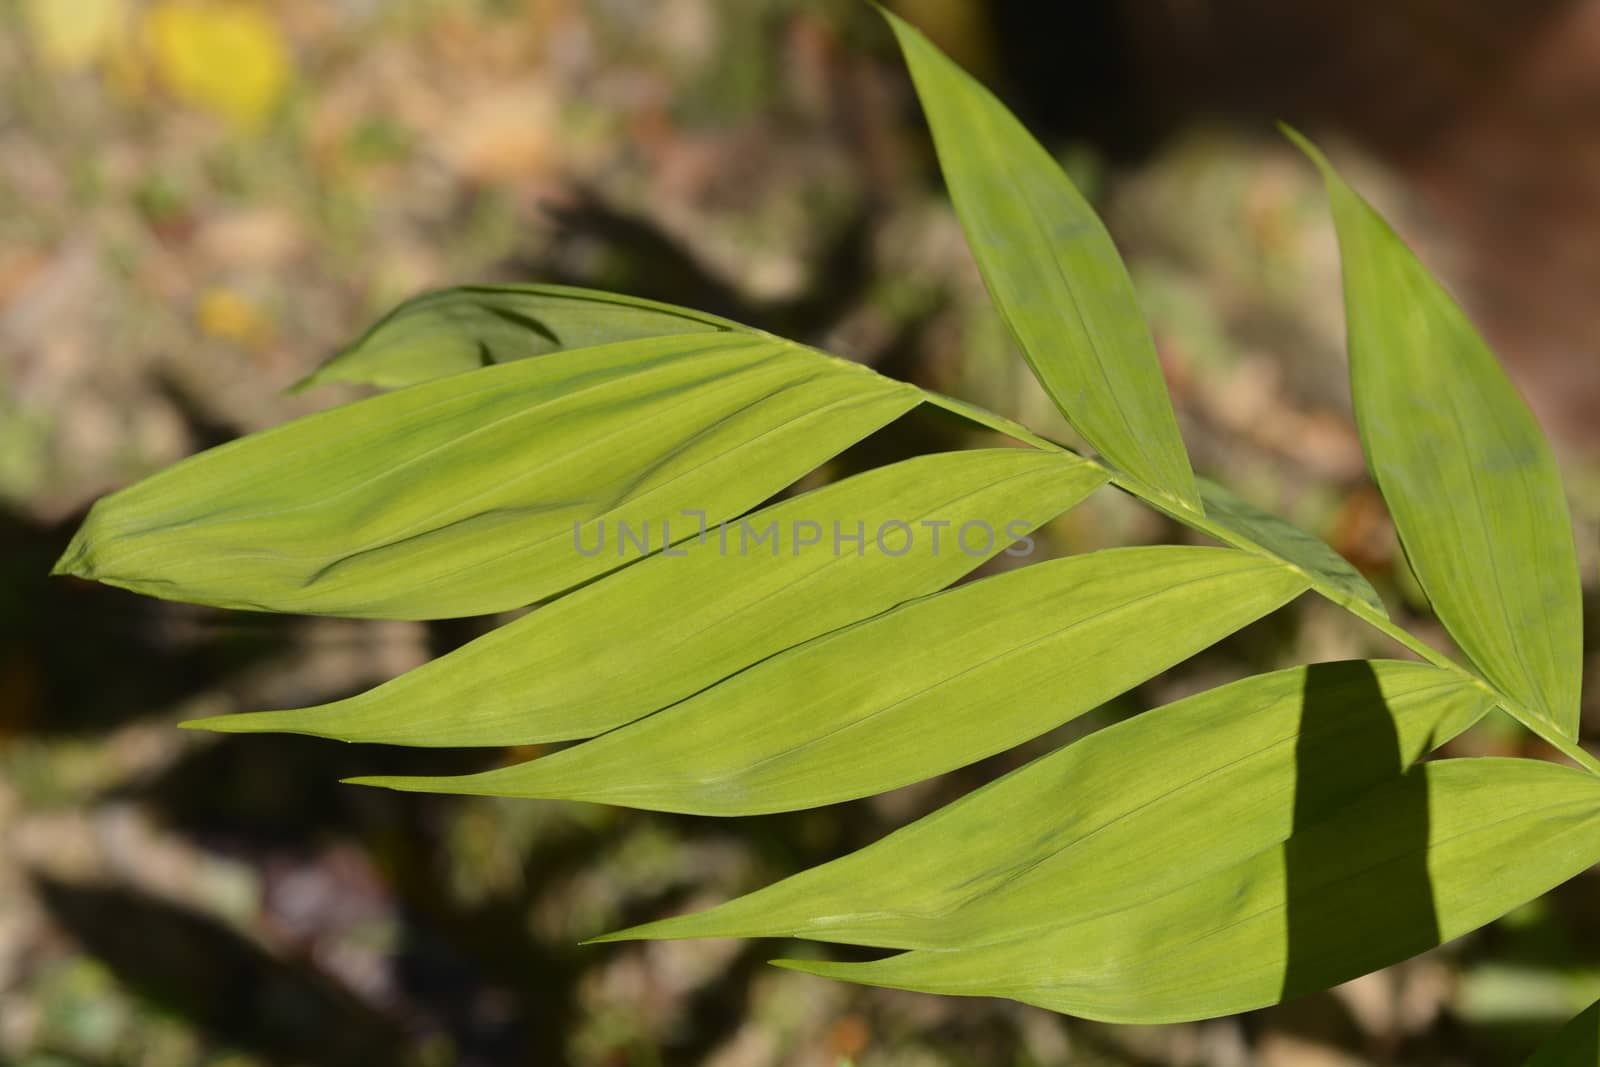 Hardy bamboo palm leaves - Latin name - Chamaedorea microspadix